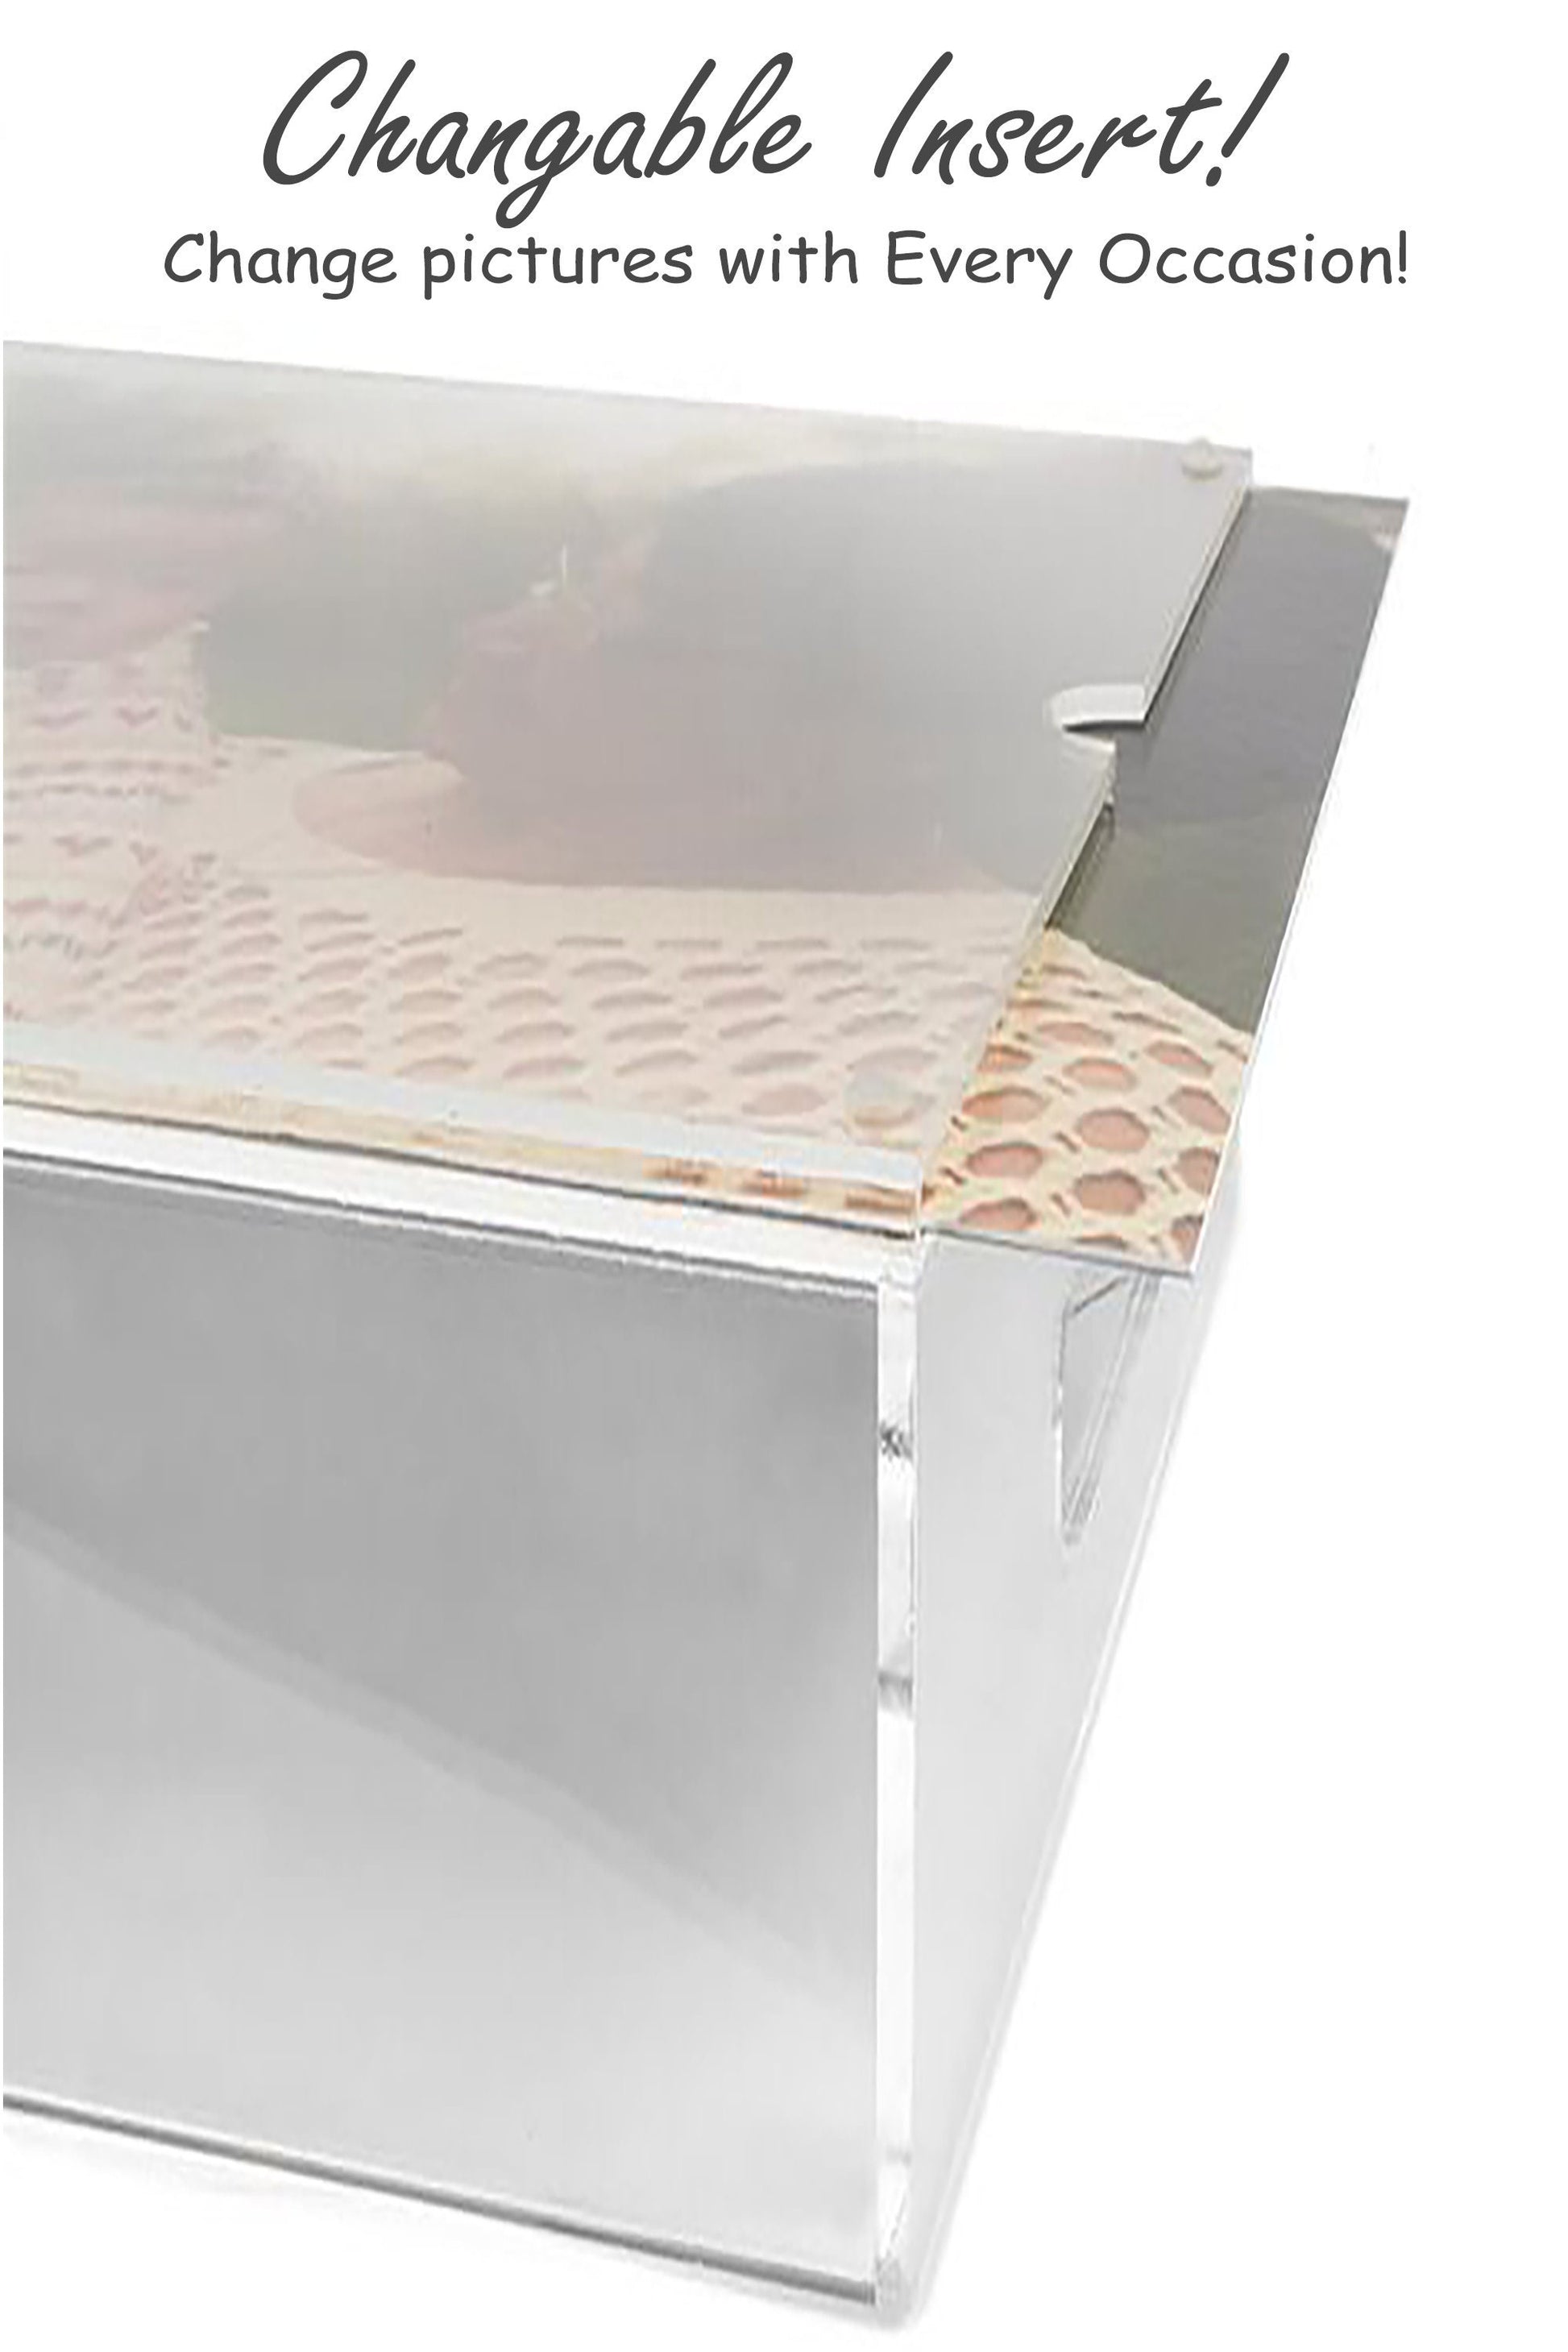 Acryluc tray with photo insert